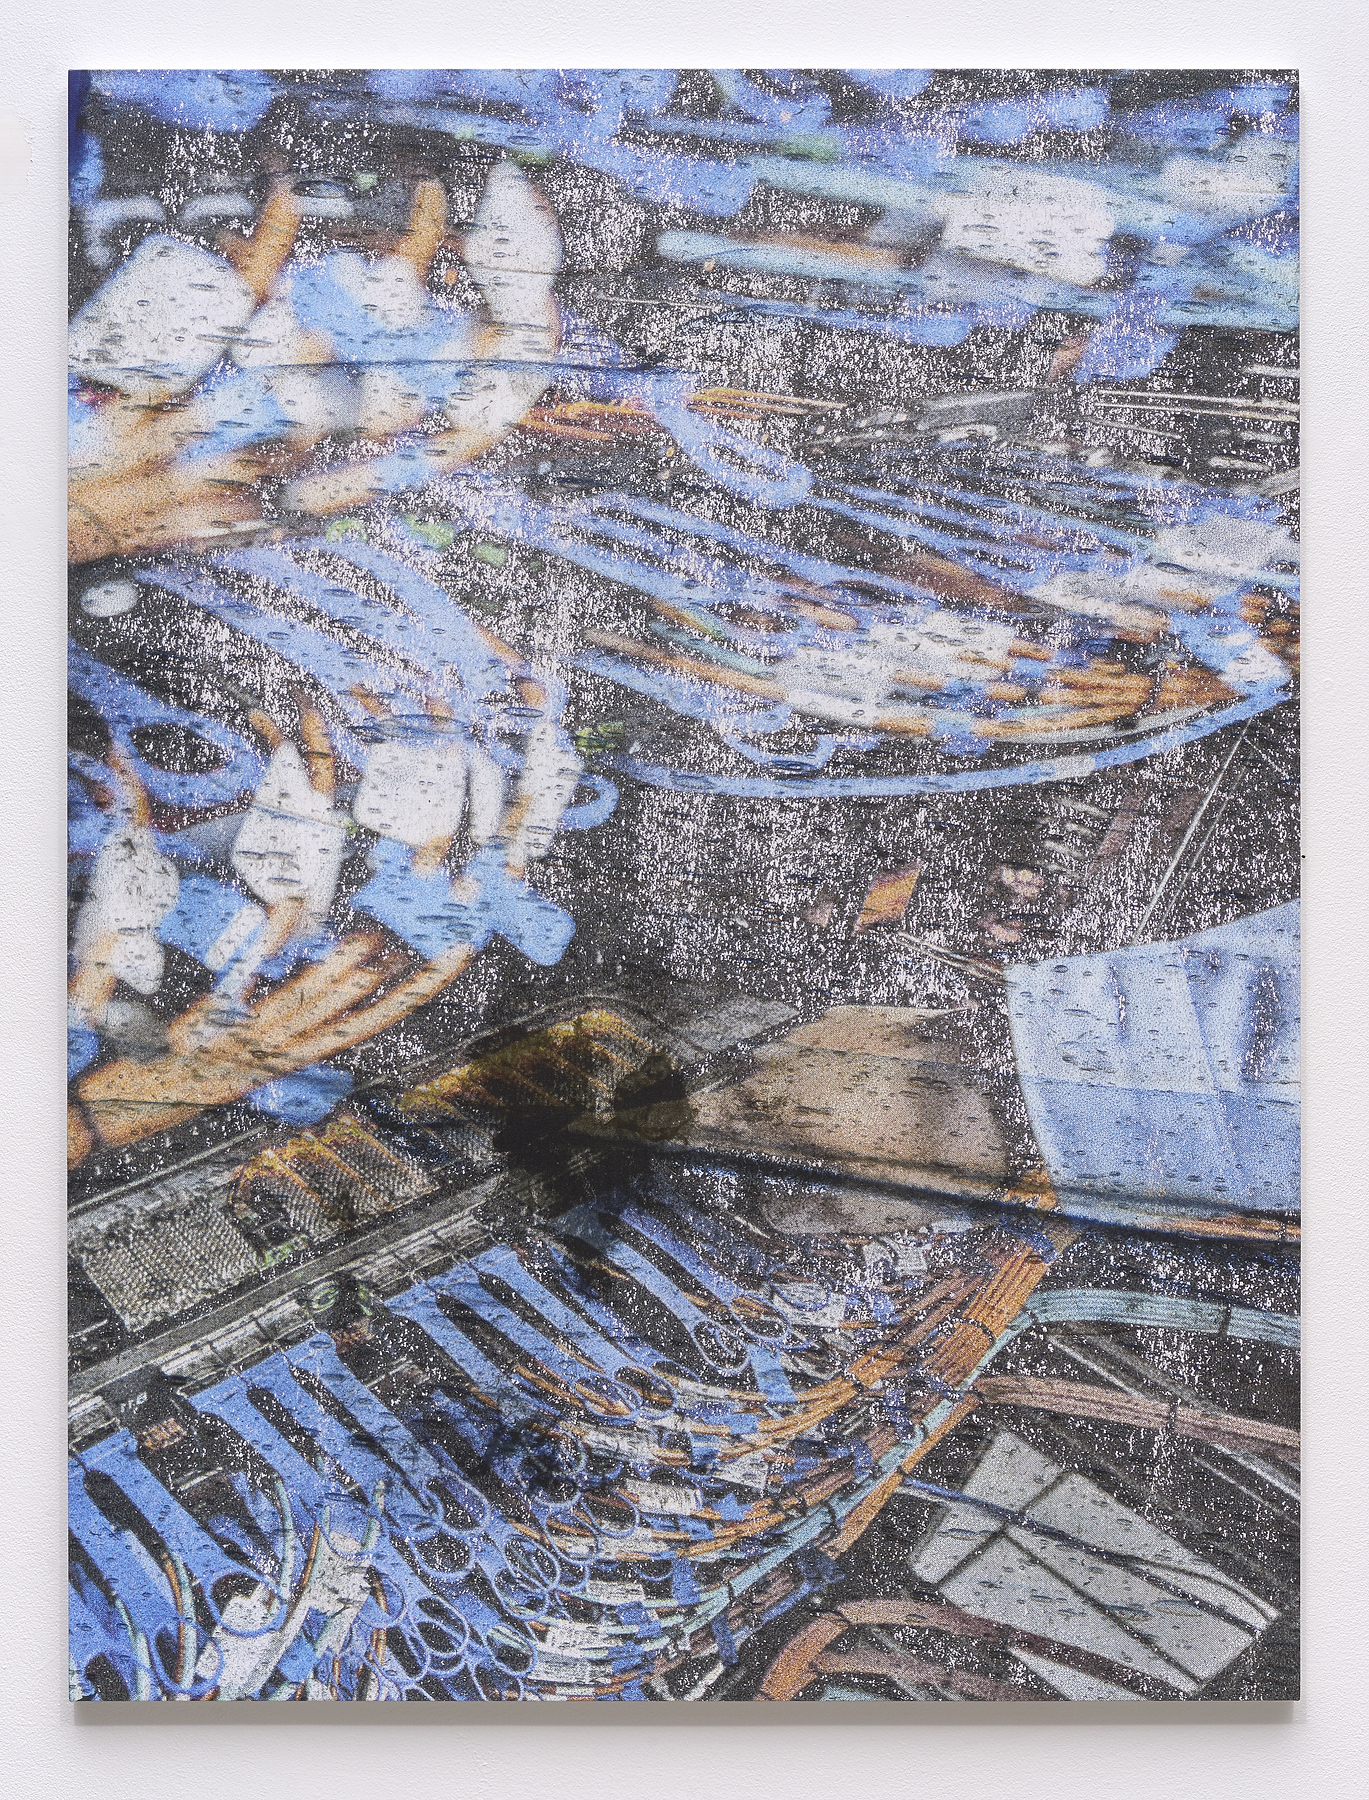  Hugh Scott-Douglas,  Untitled , 2018, UV cured inkjet print, digitally printed polyester resin on dibond, 53 x 40 inches 